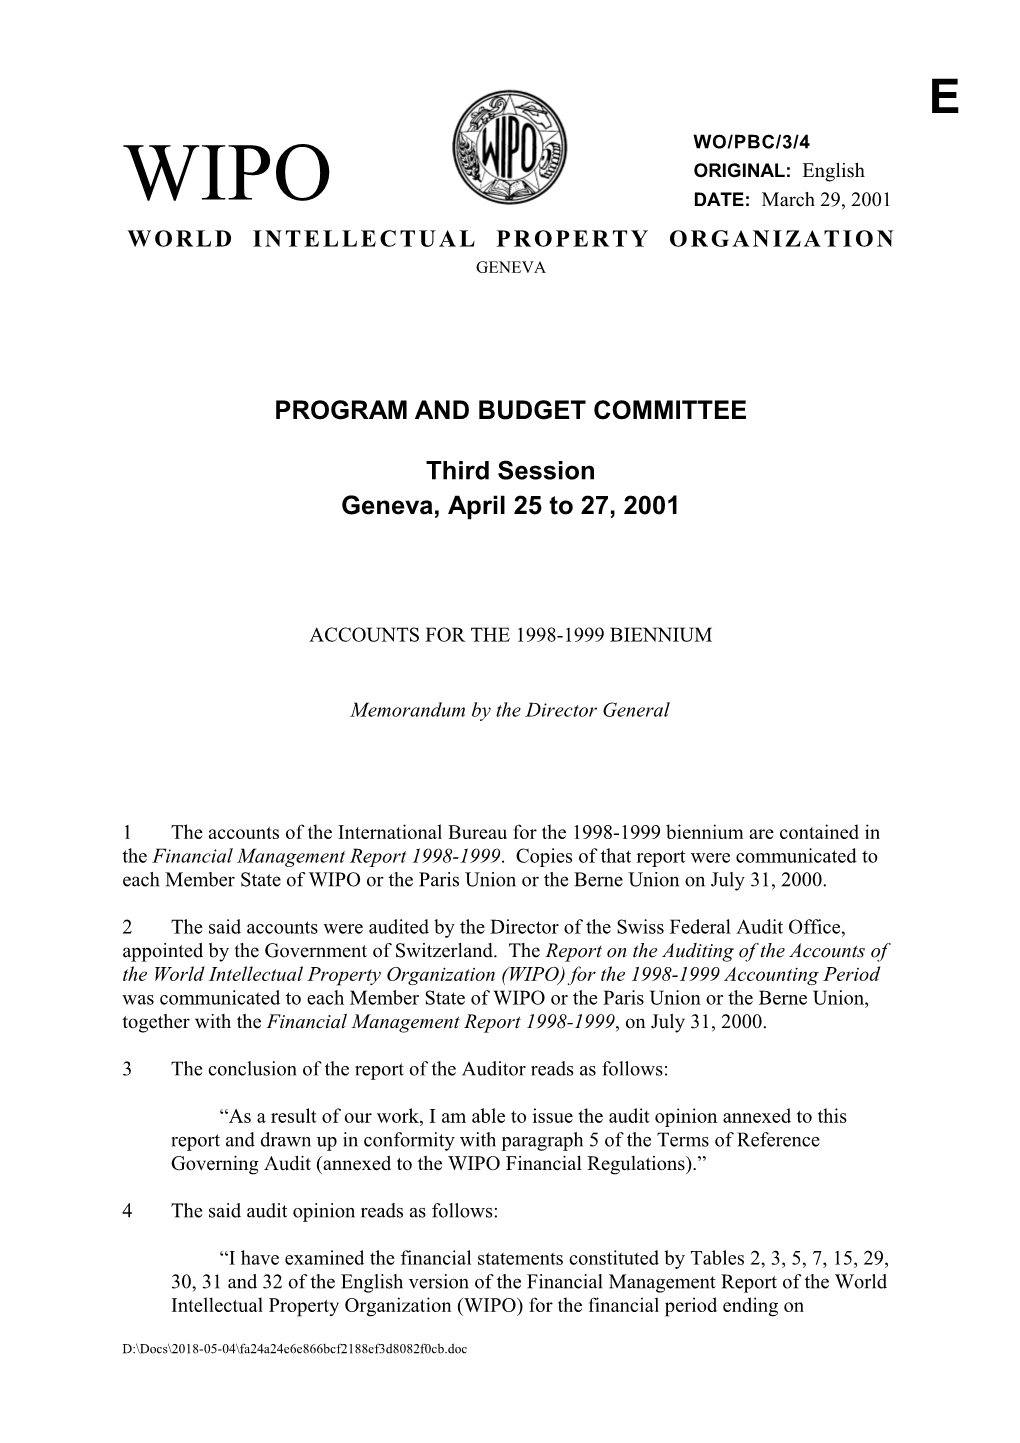 WO/PBC/3/4: Accounts for the 1998-1999 Biennium